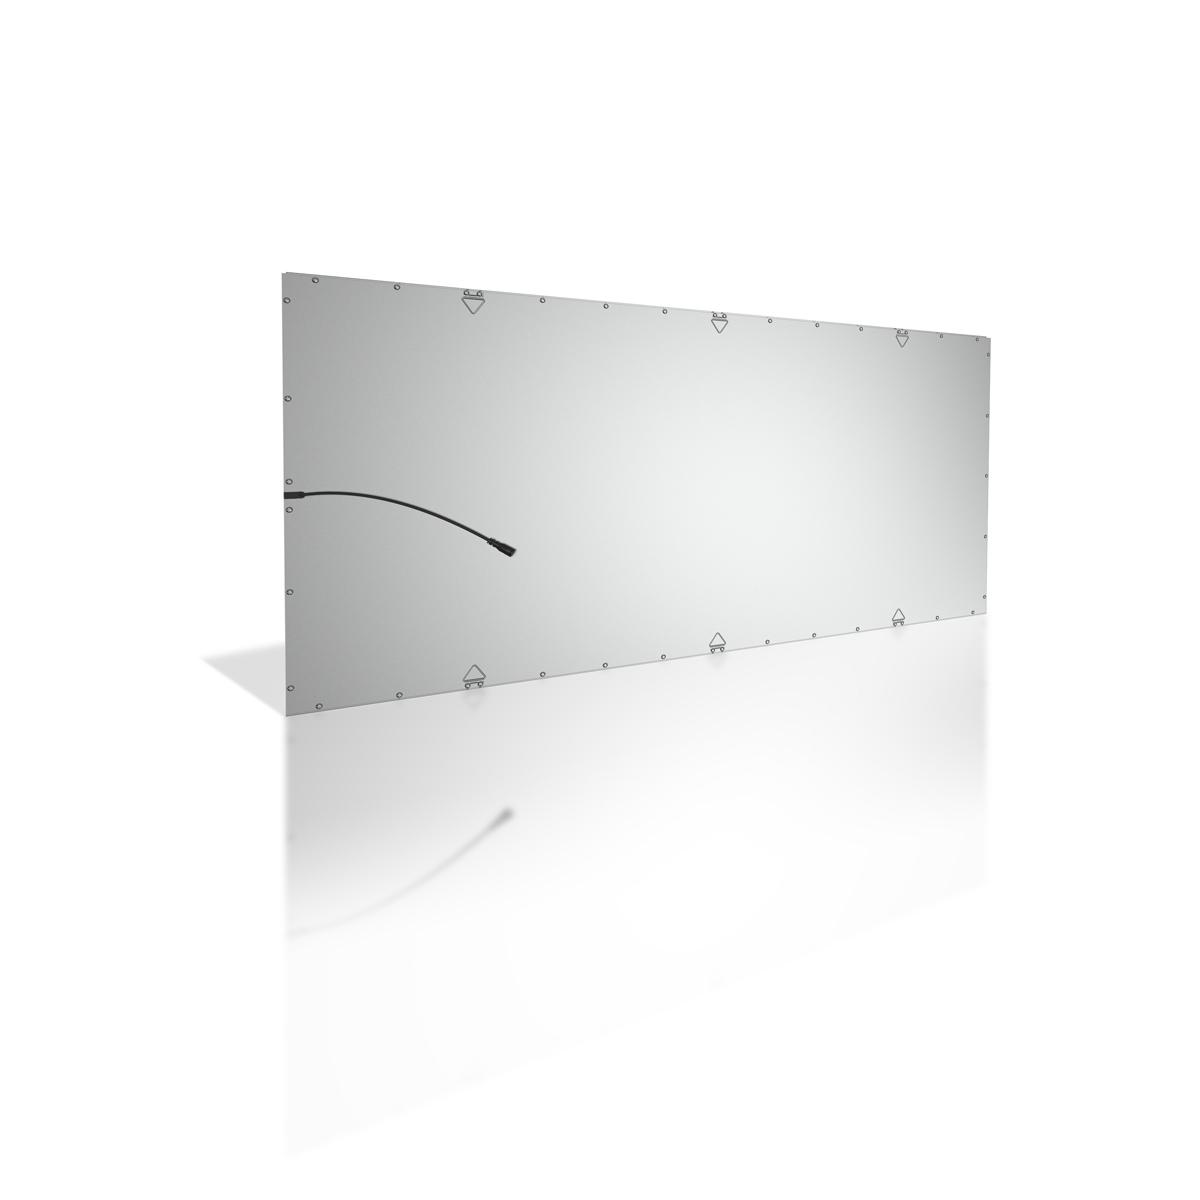 LED Panel 120x60cm 60W Rahmen silber - Lichtfarbe: Kaltweiß 5500K